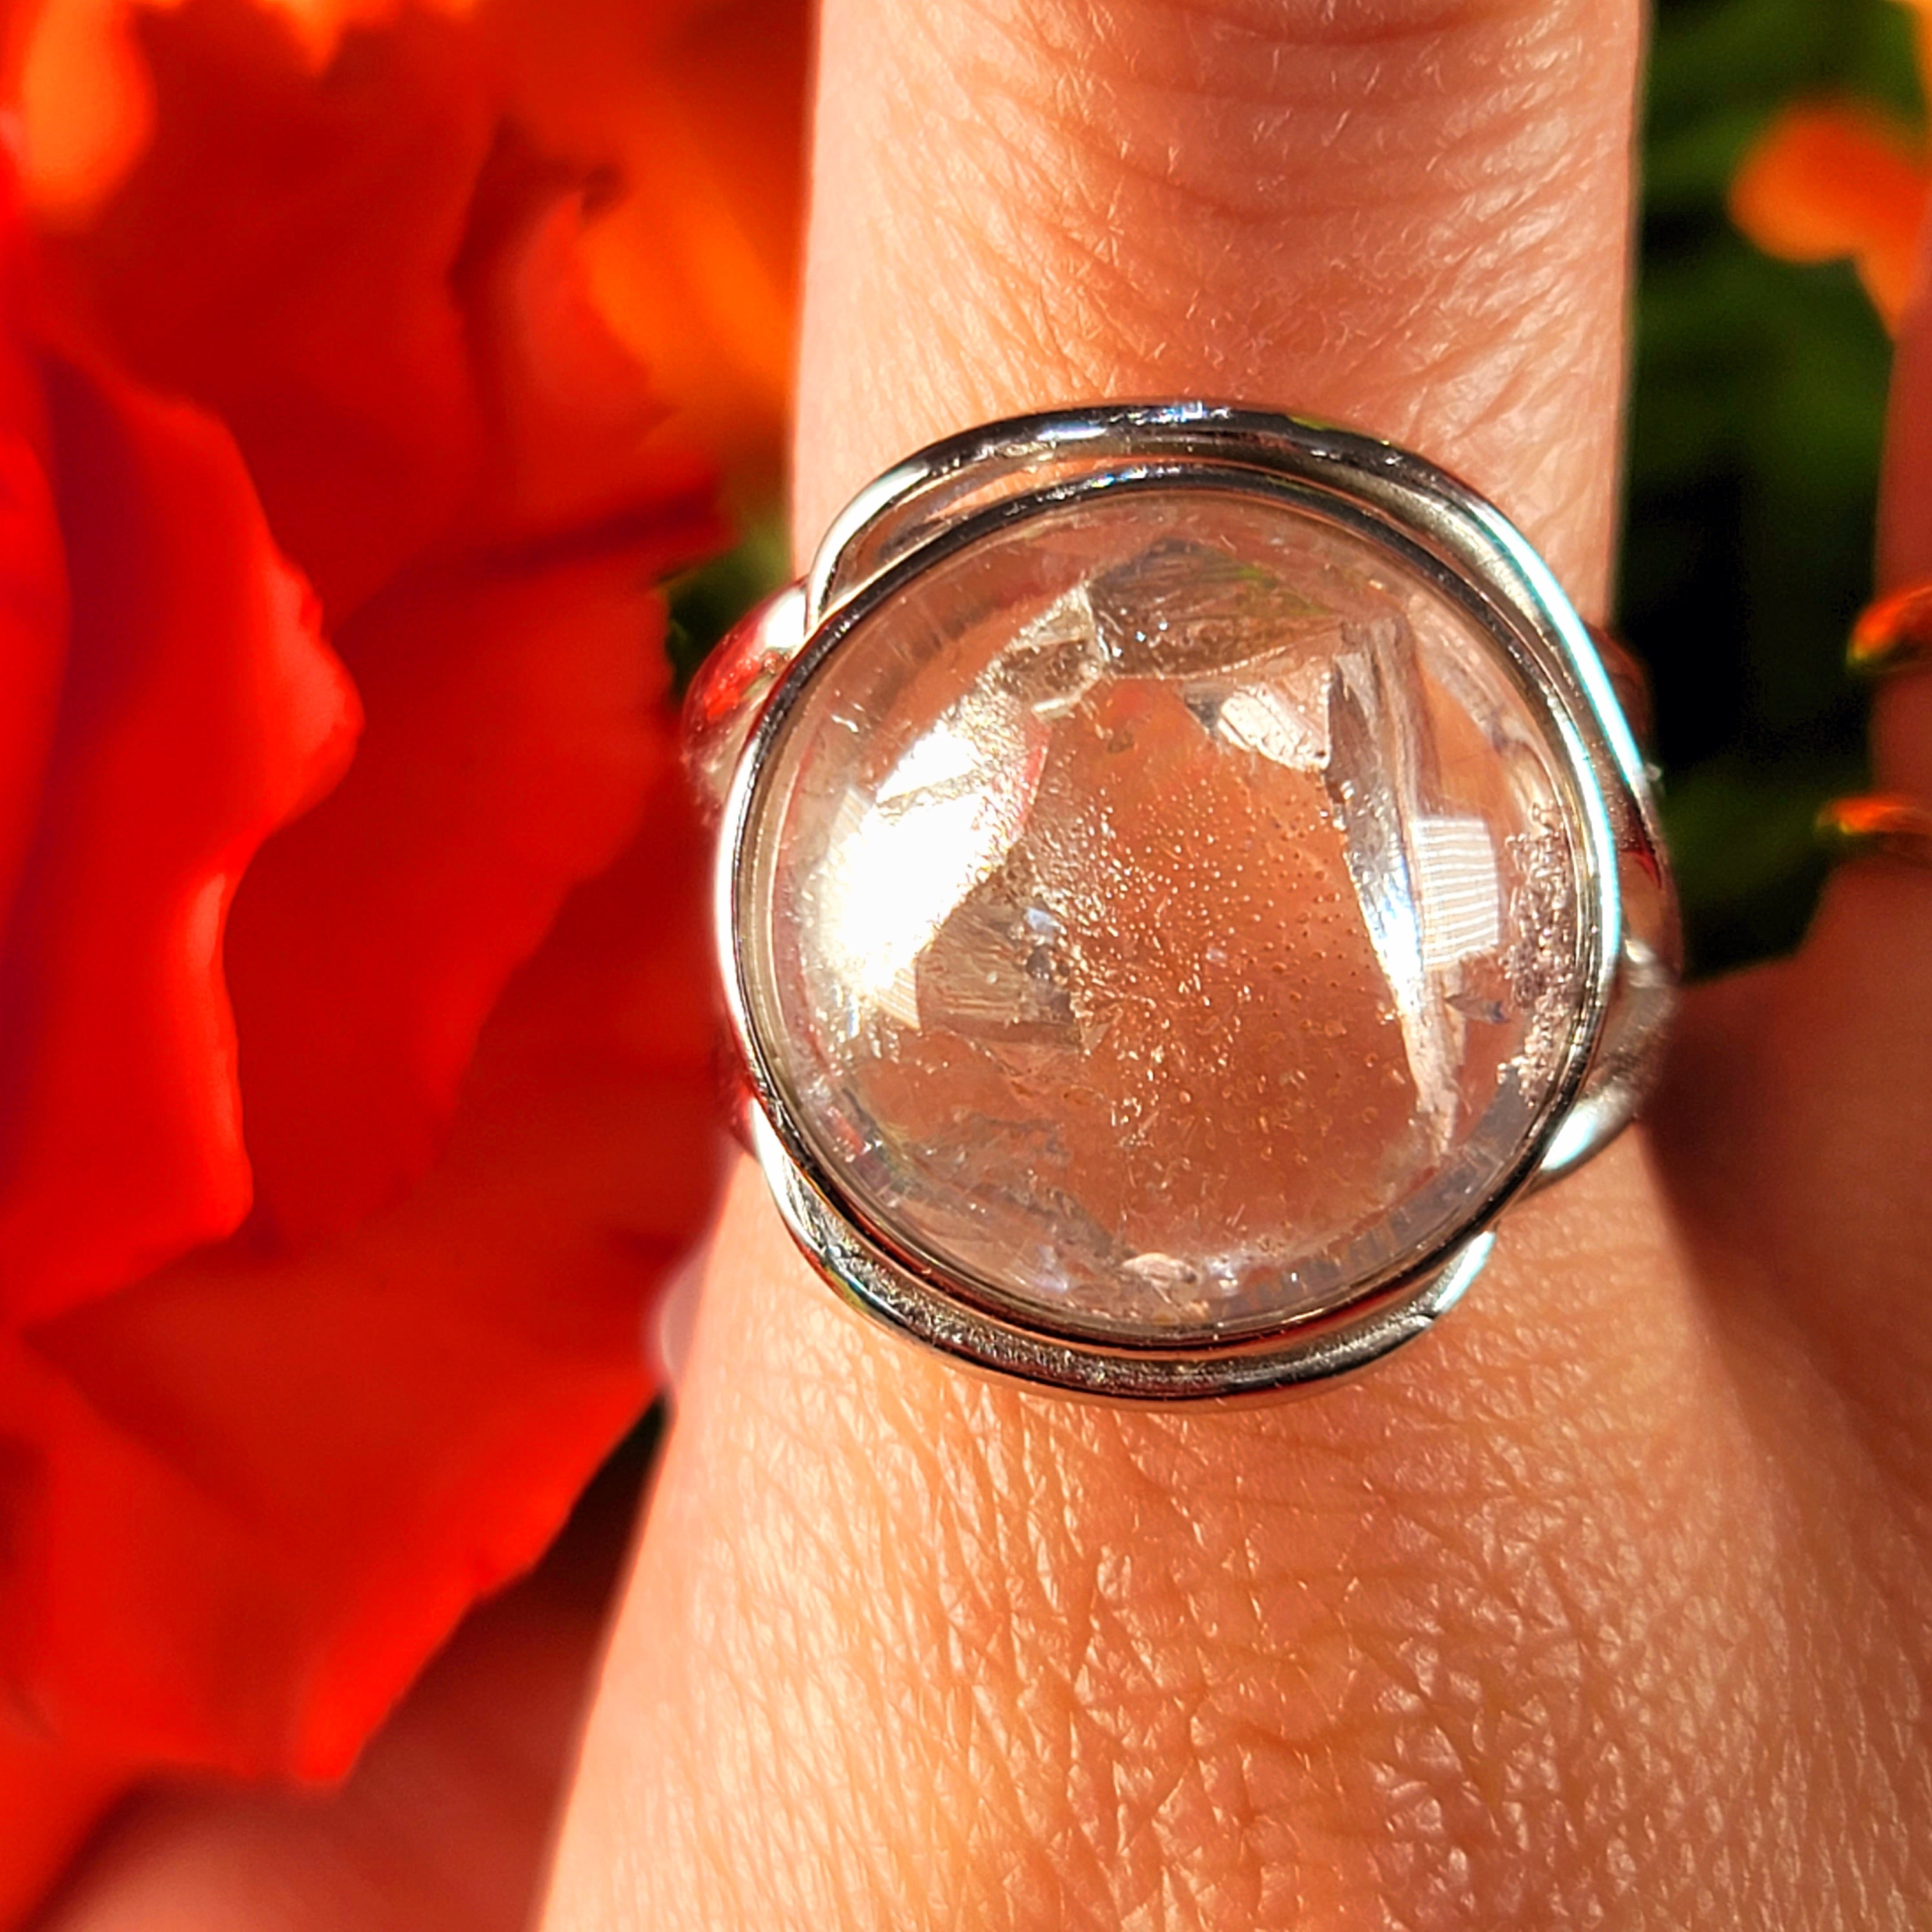 Manifestation Quartz Inner Child Finger Cuff Adjustable Ring .925 Silver for Manifesting Anything you Desire